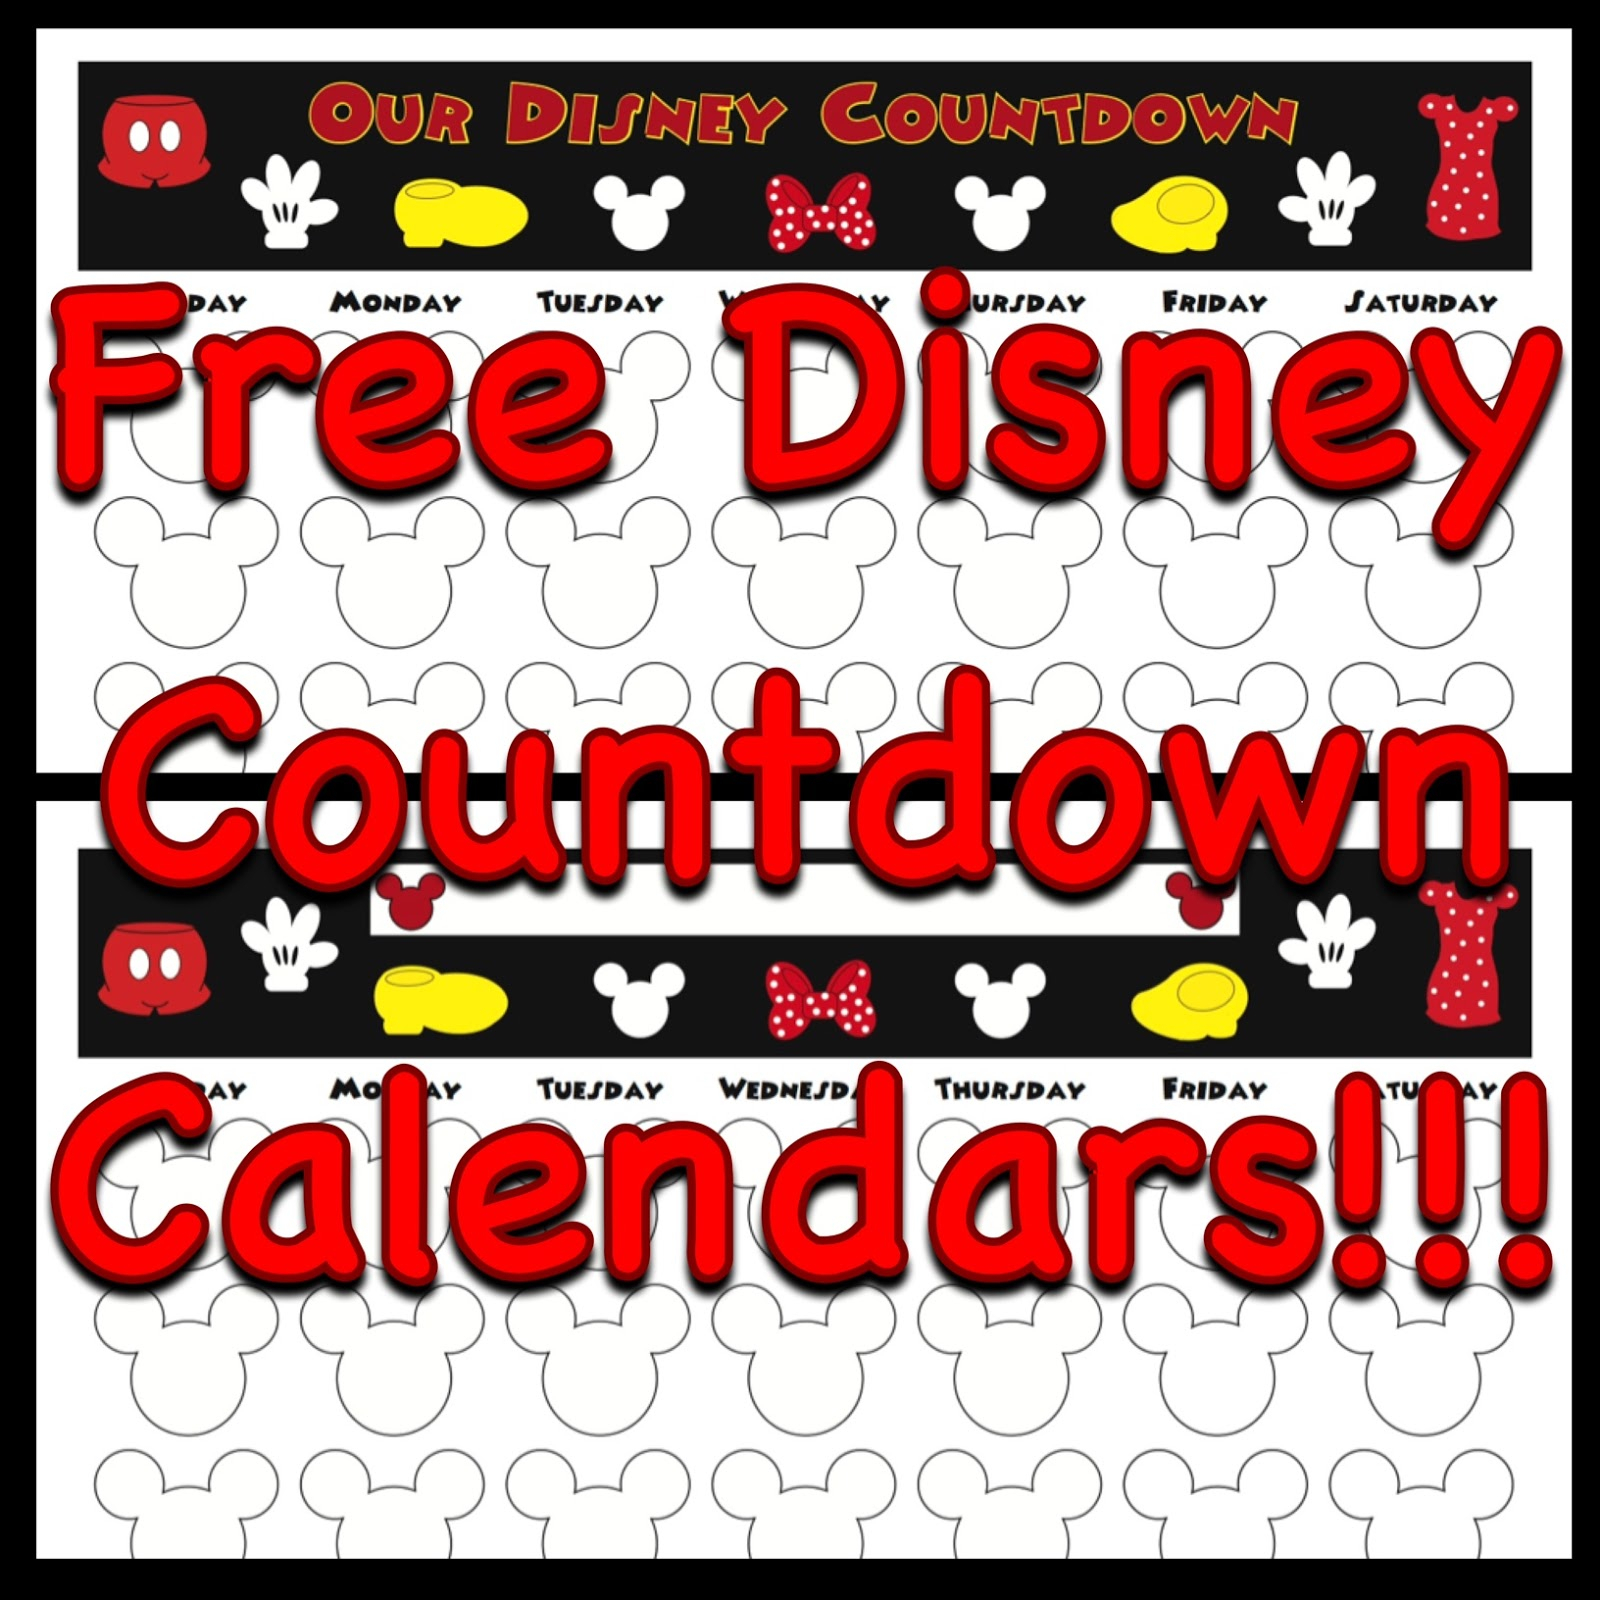 My Disney Life Countdown Calendars